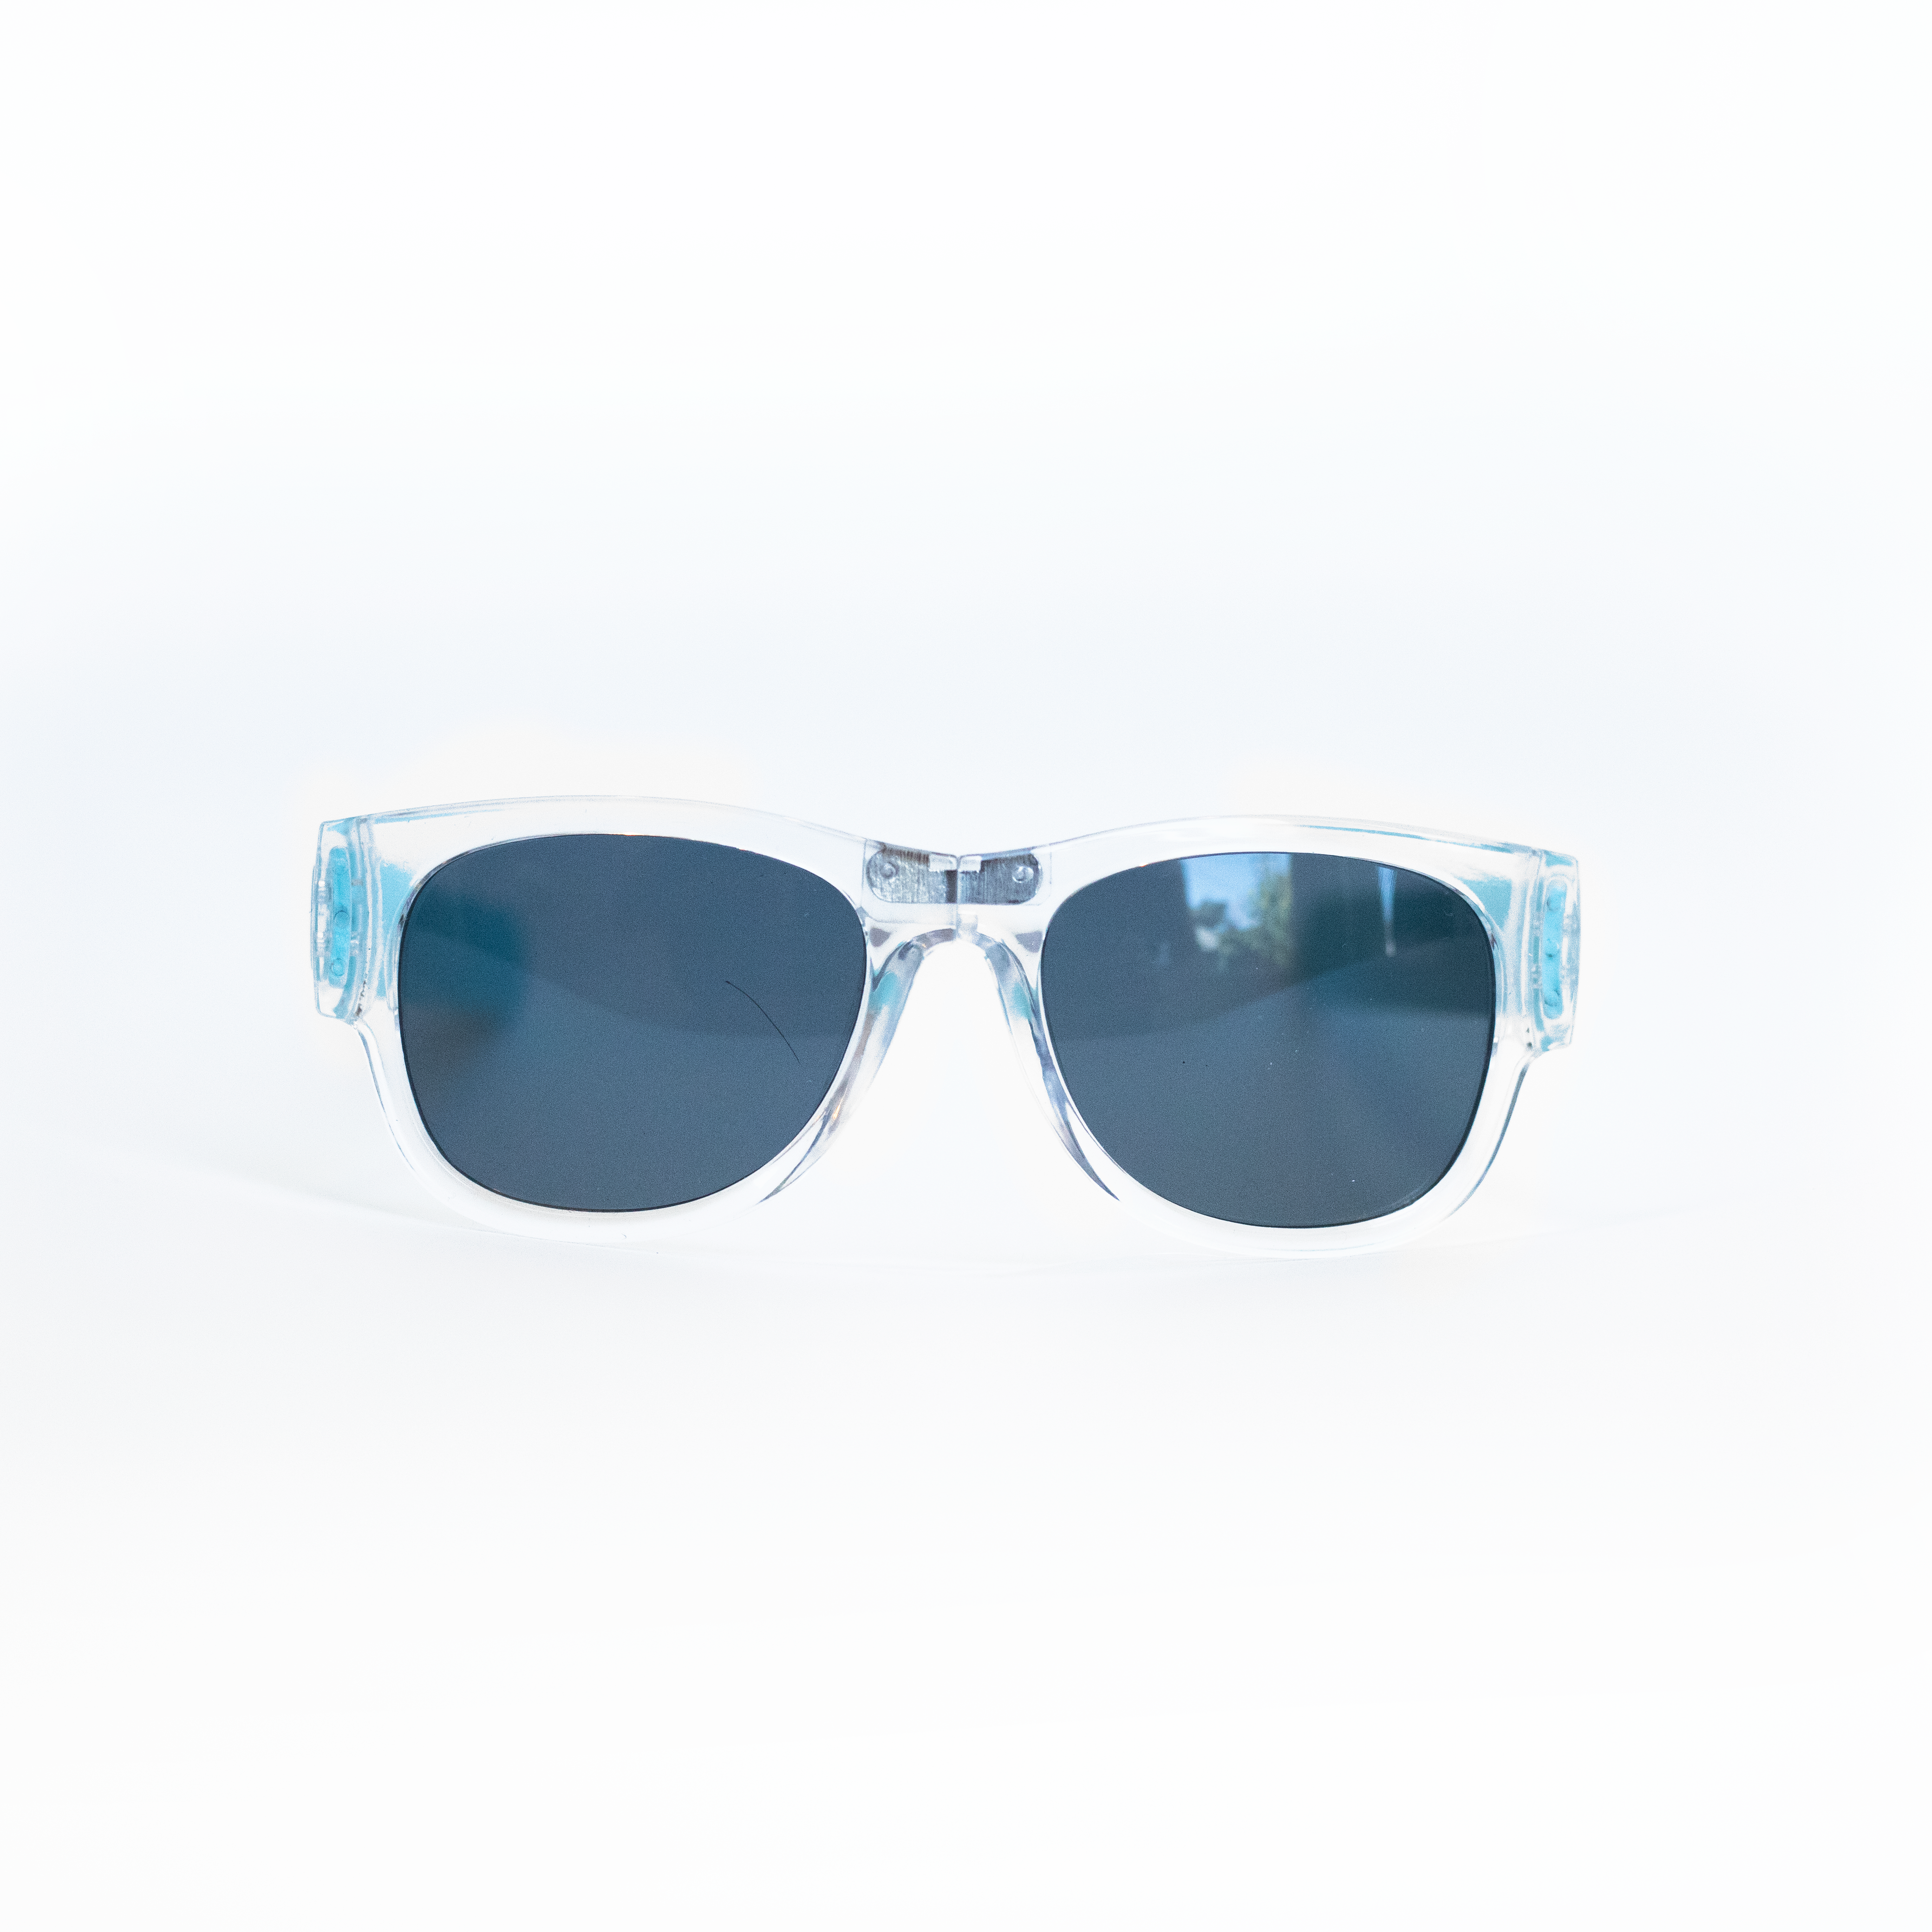 Blue Snappable Sunglasses: Original